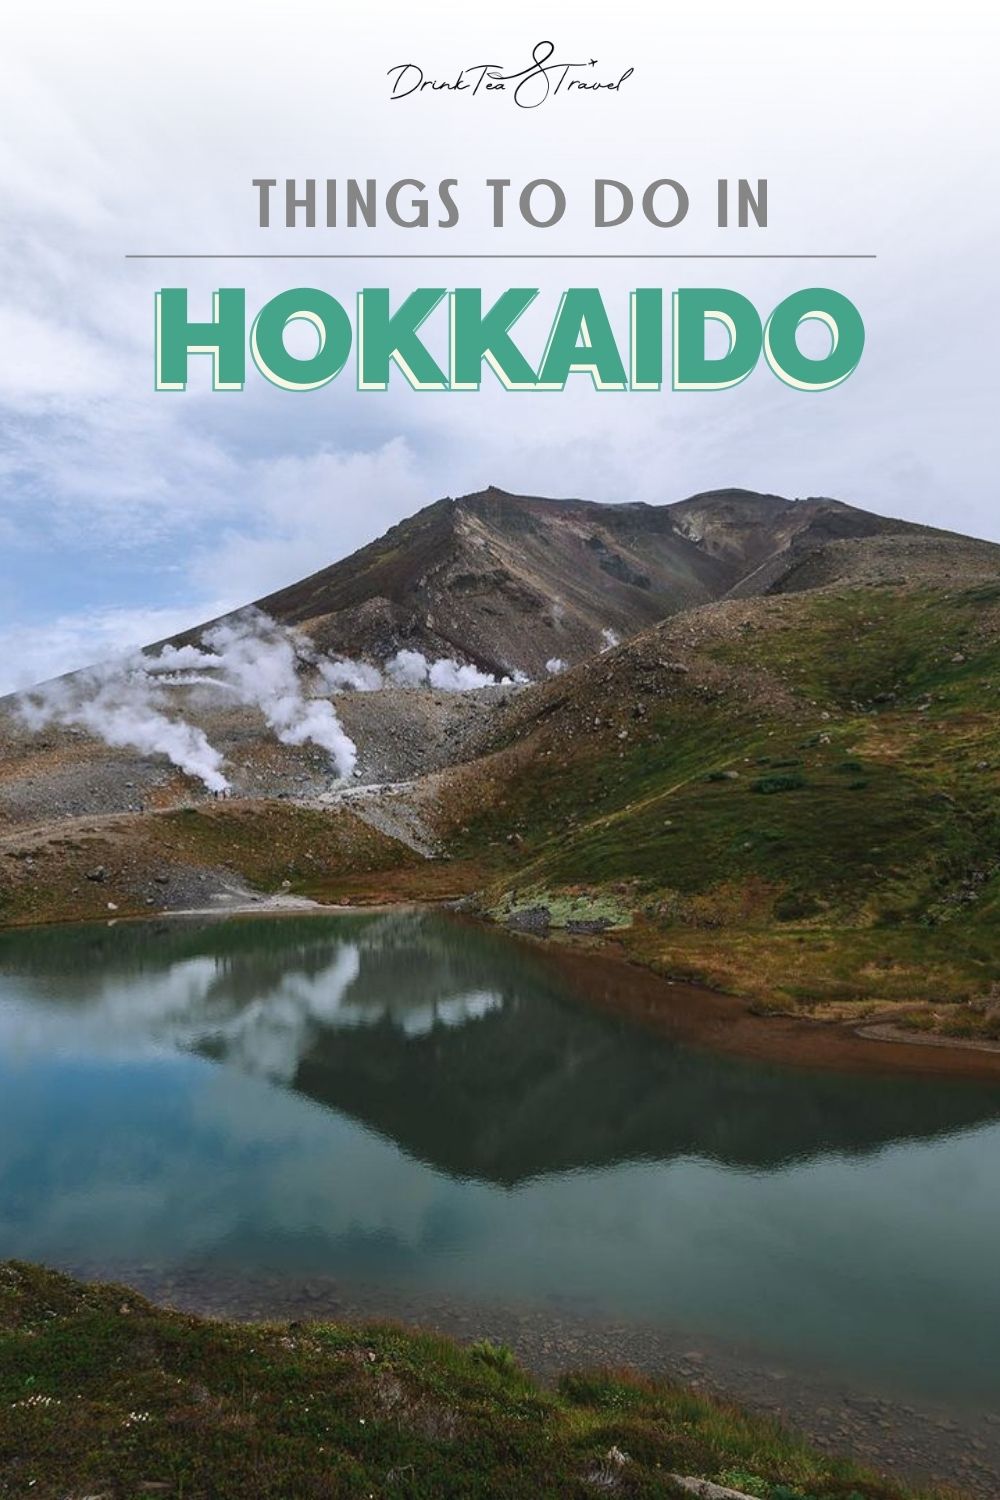 Things to do in Hokkaido